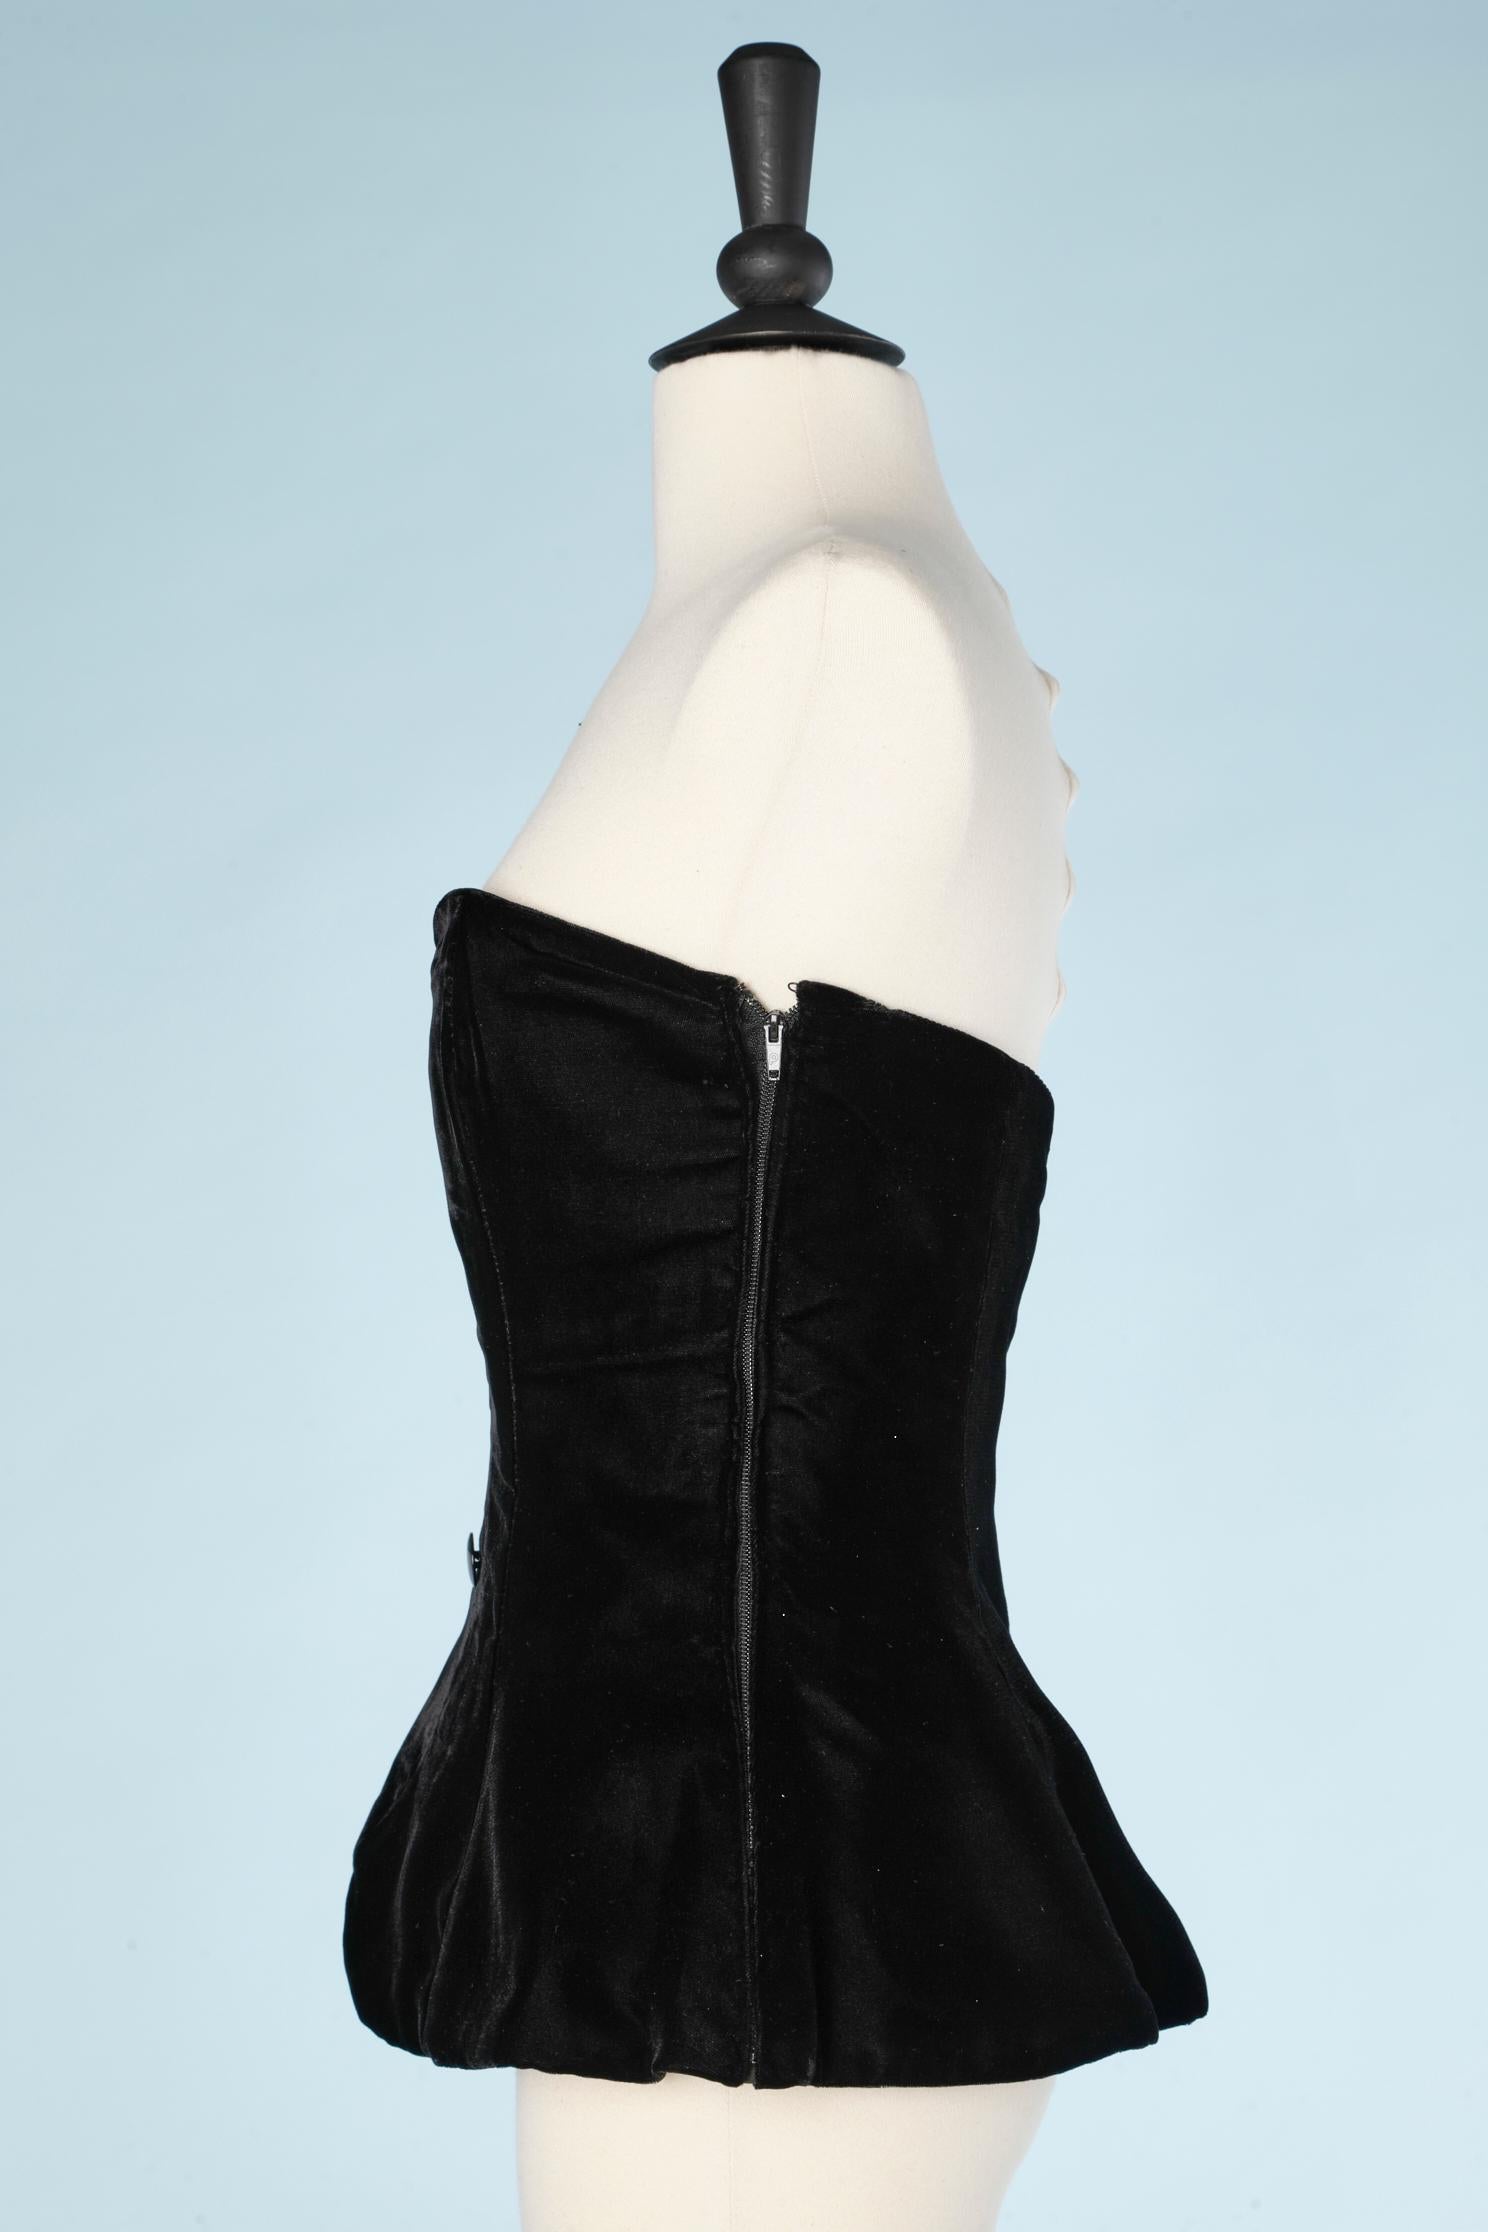 Black  silk velvet bustier Christian Dior Boutique (by Gianfranco Ferré) 1